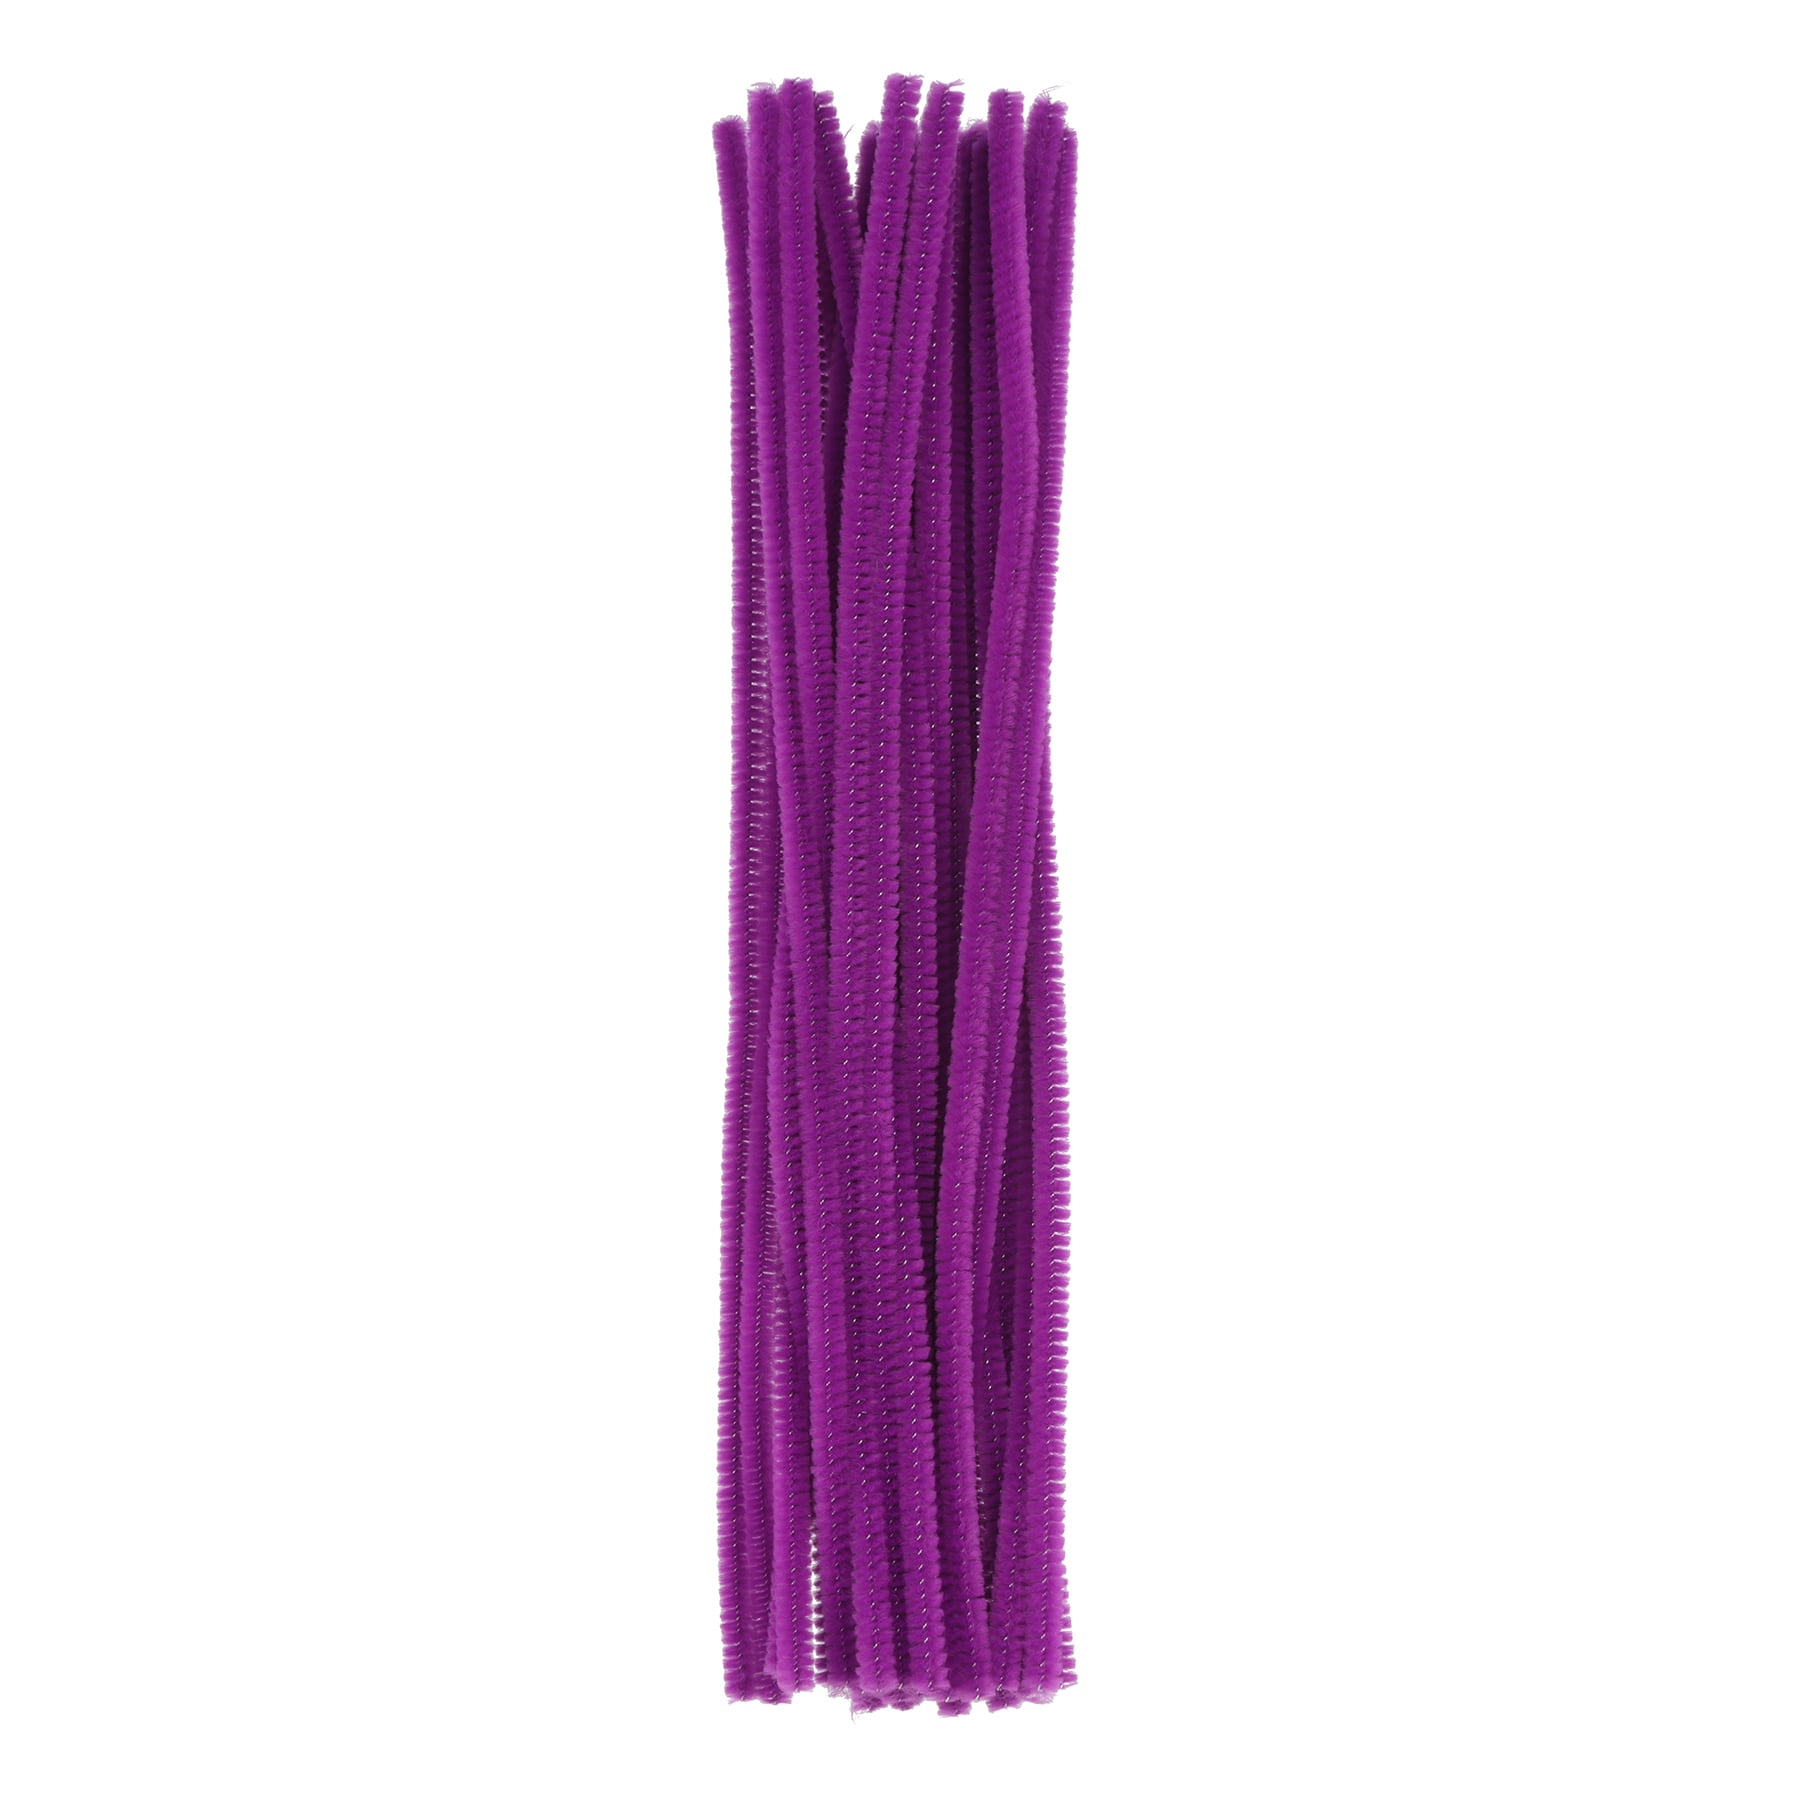 Chenille Craft Stems, Purple –